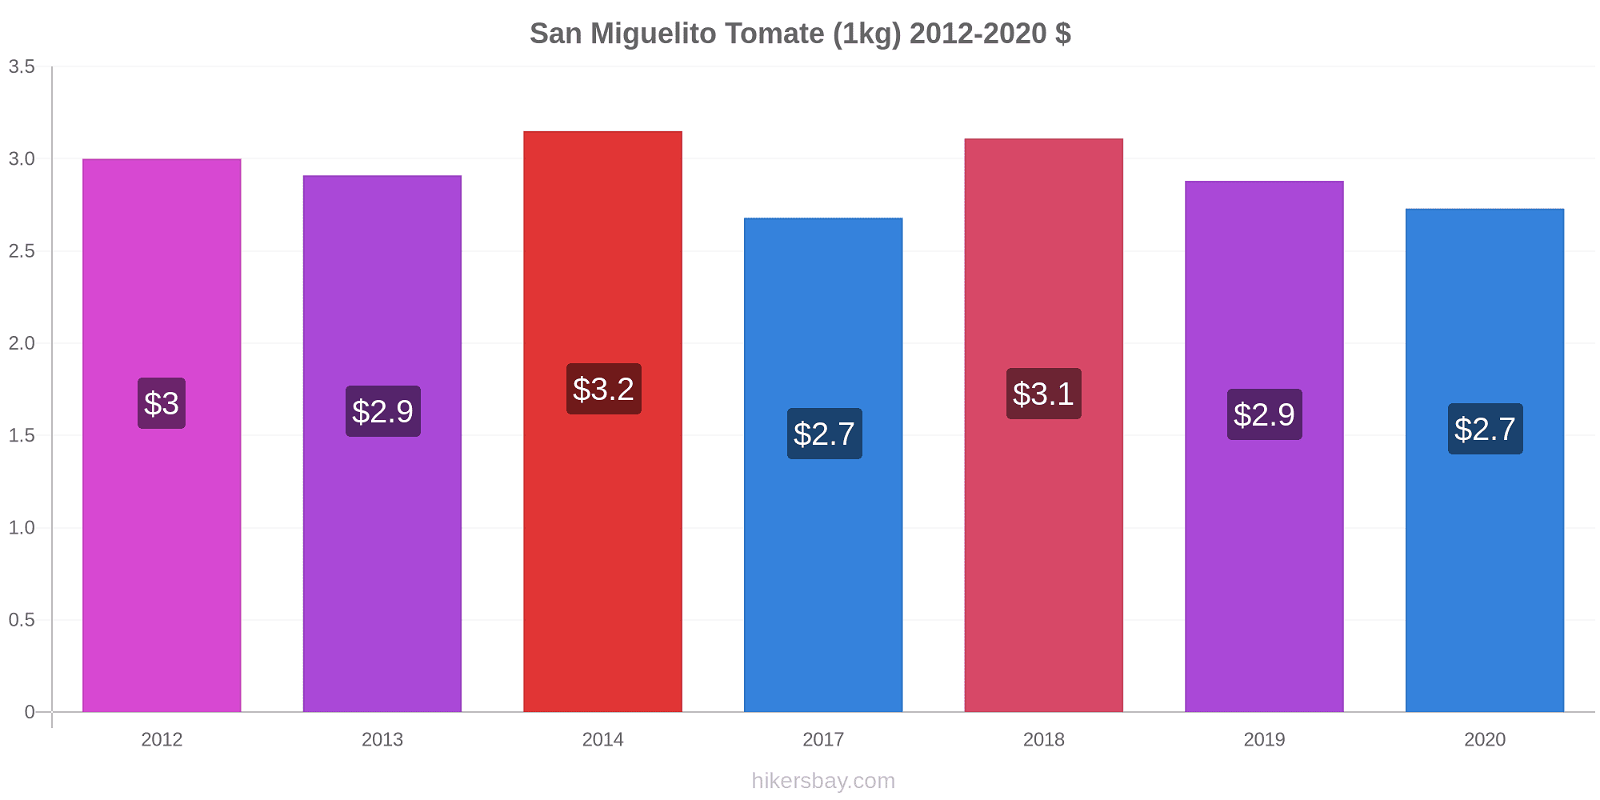 San Miguelito Preisänderungen Tomaten (1kg) hikersbay.com